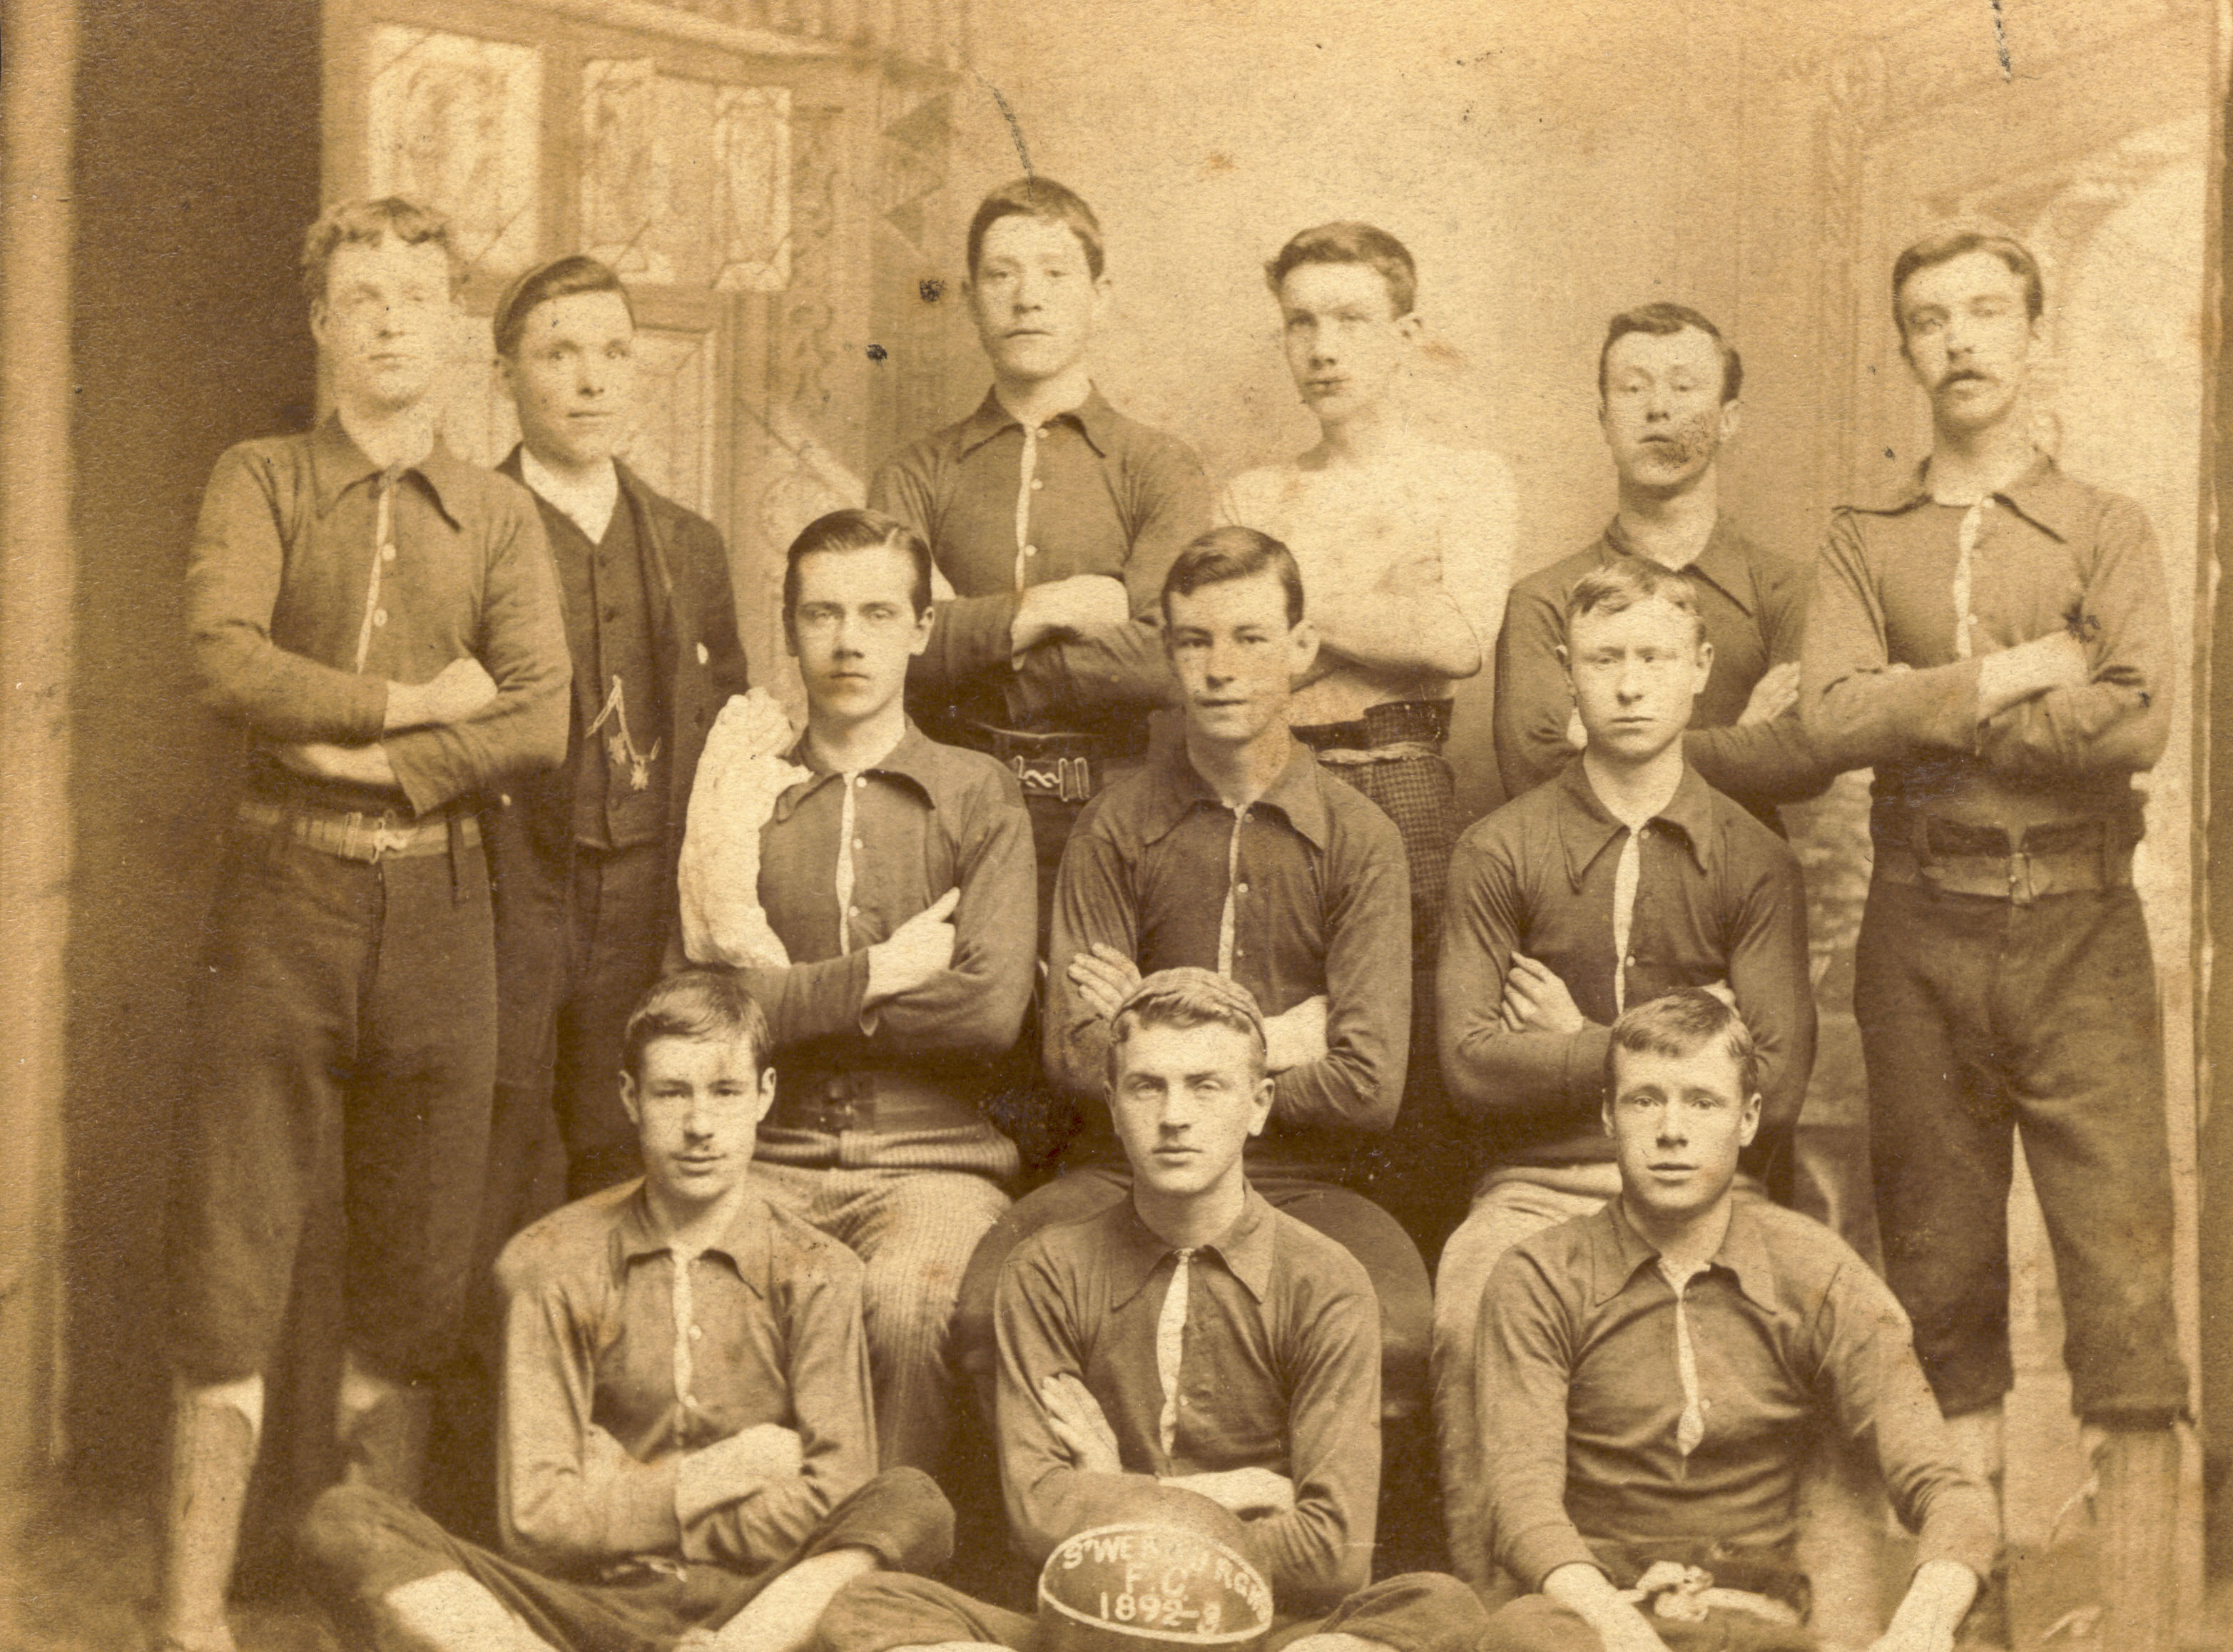 Football team 1890s